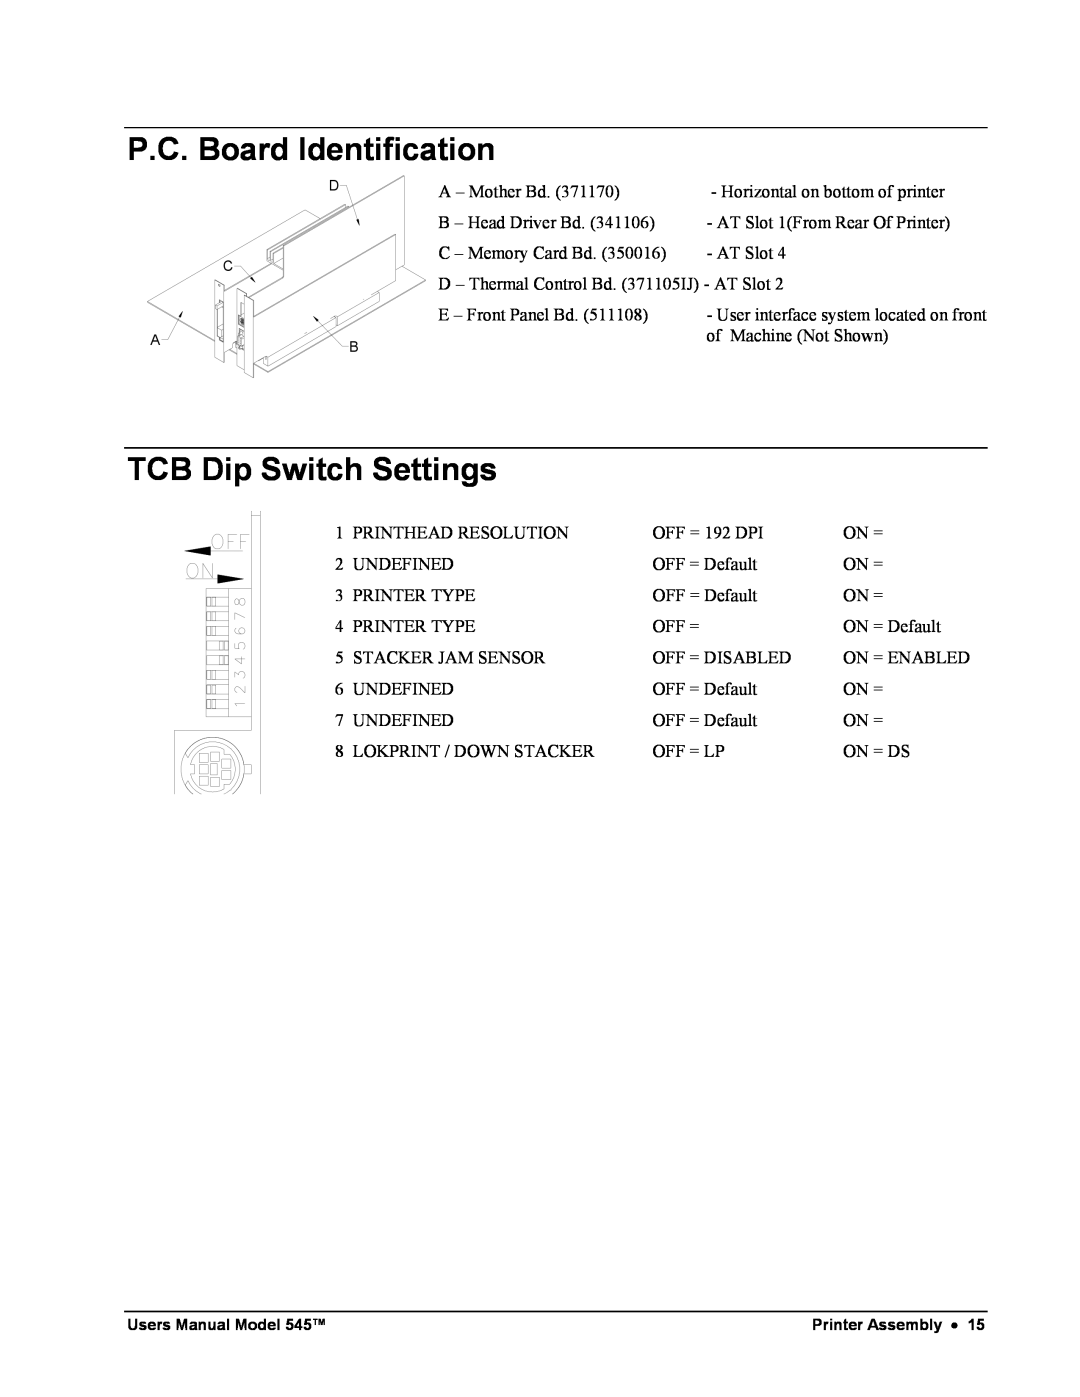 Paxar 545 user manual P.C. Board Identification, TCB Dip Switch Settings 